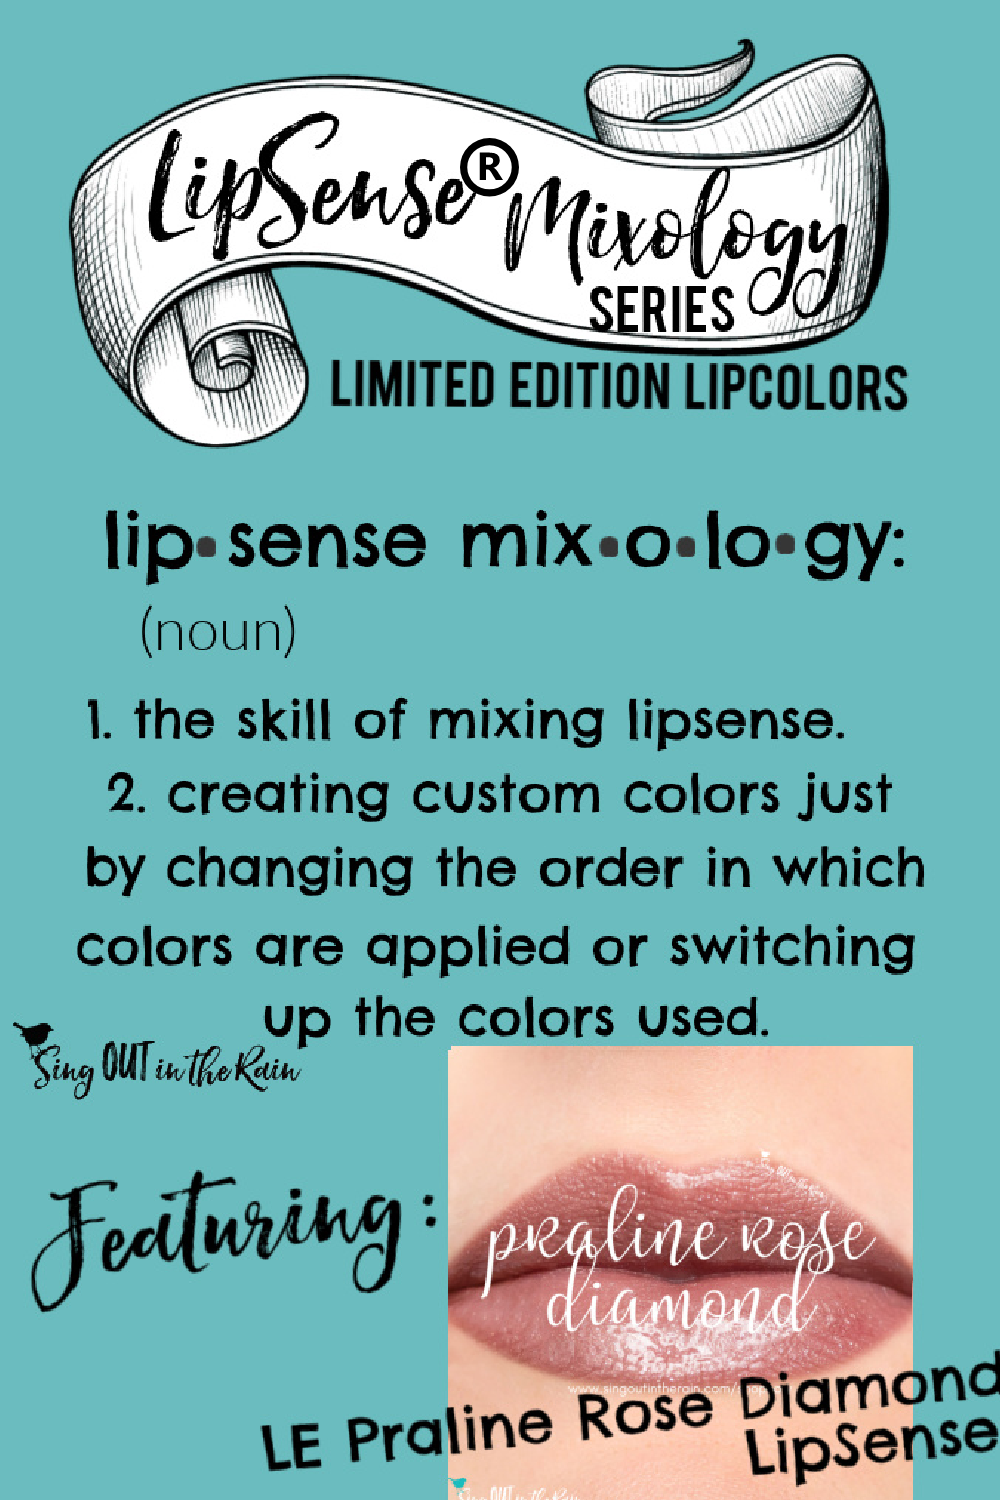 The Ultimate Guide to Praline Rose Diamond LipSense Mixology